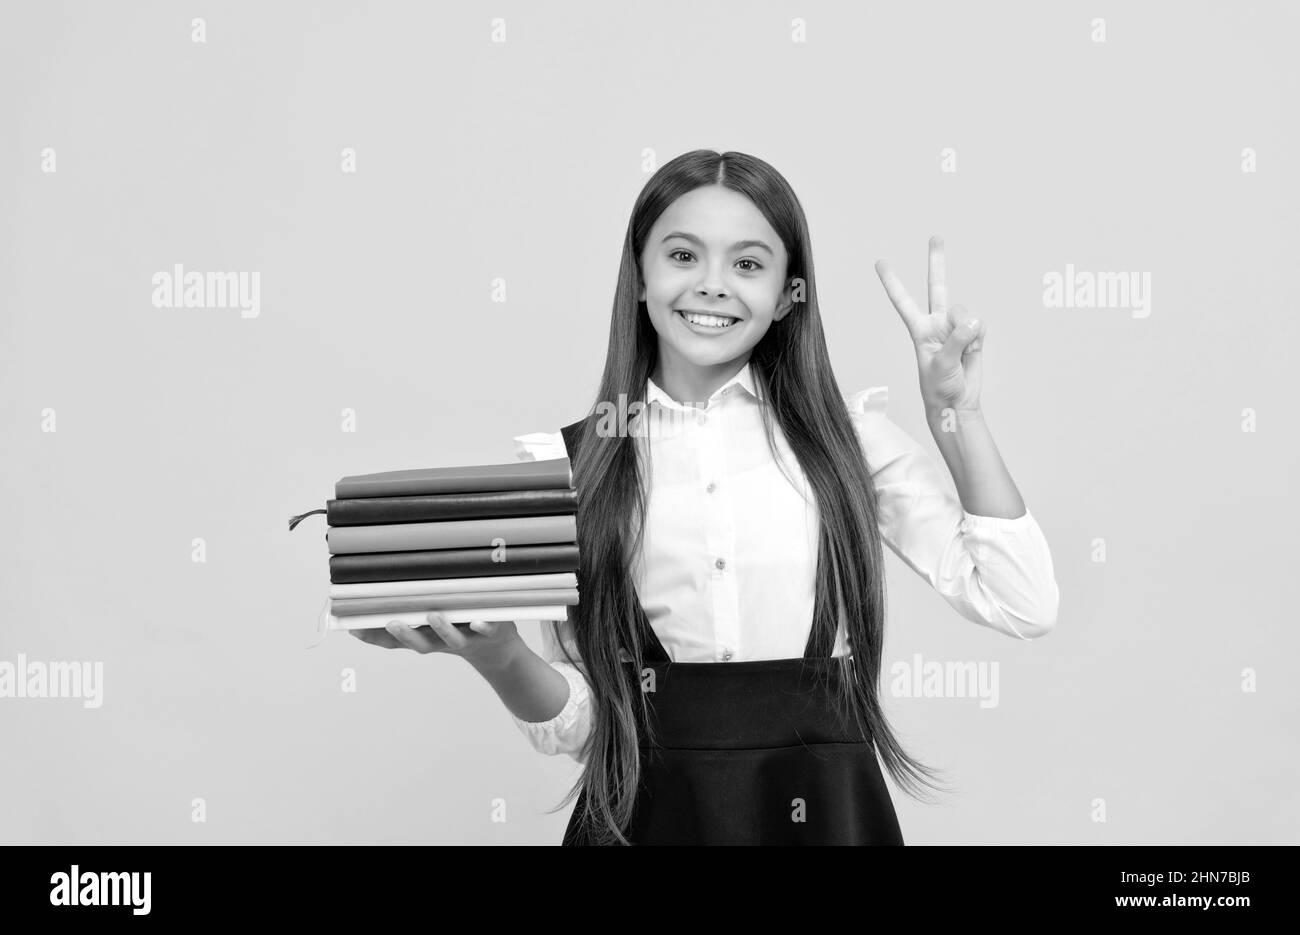 happy teen girl in school uniform hold book stack show peace gesture ...